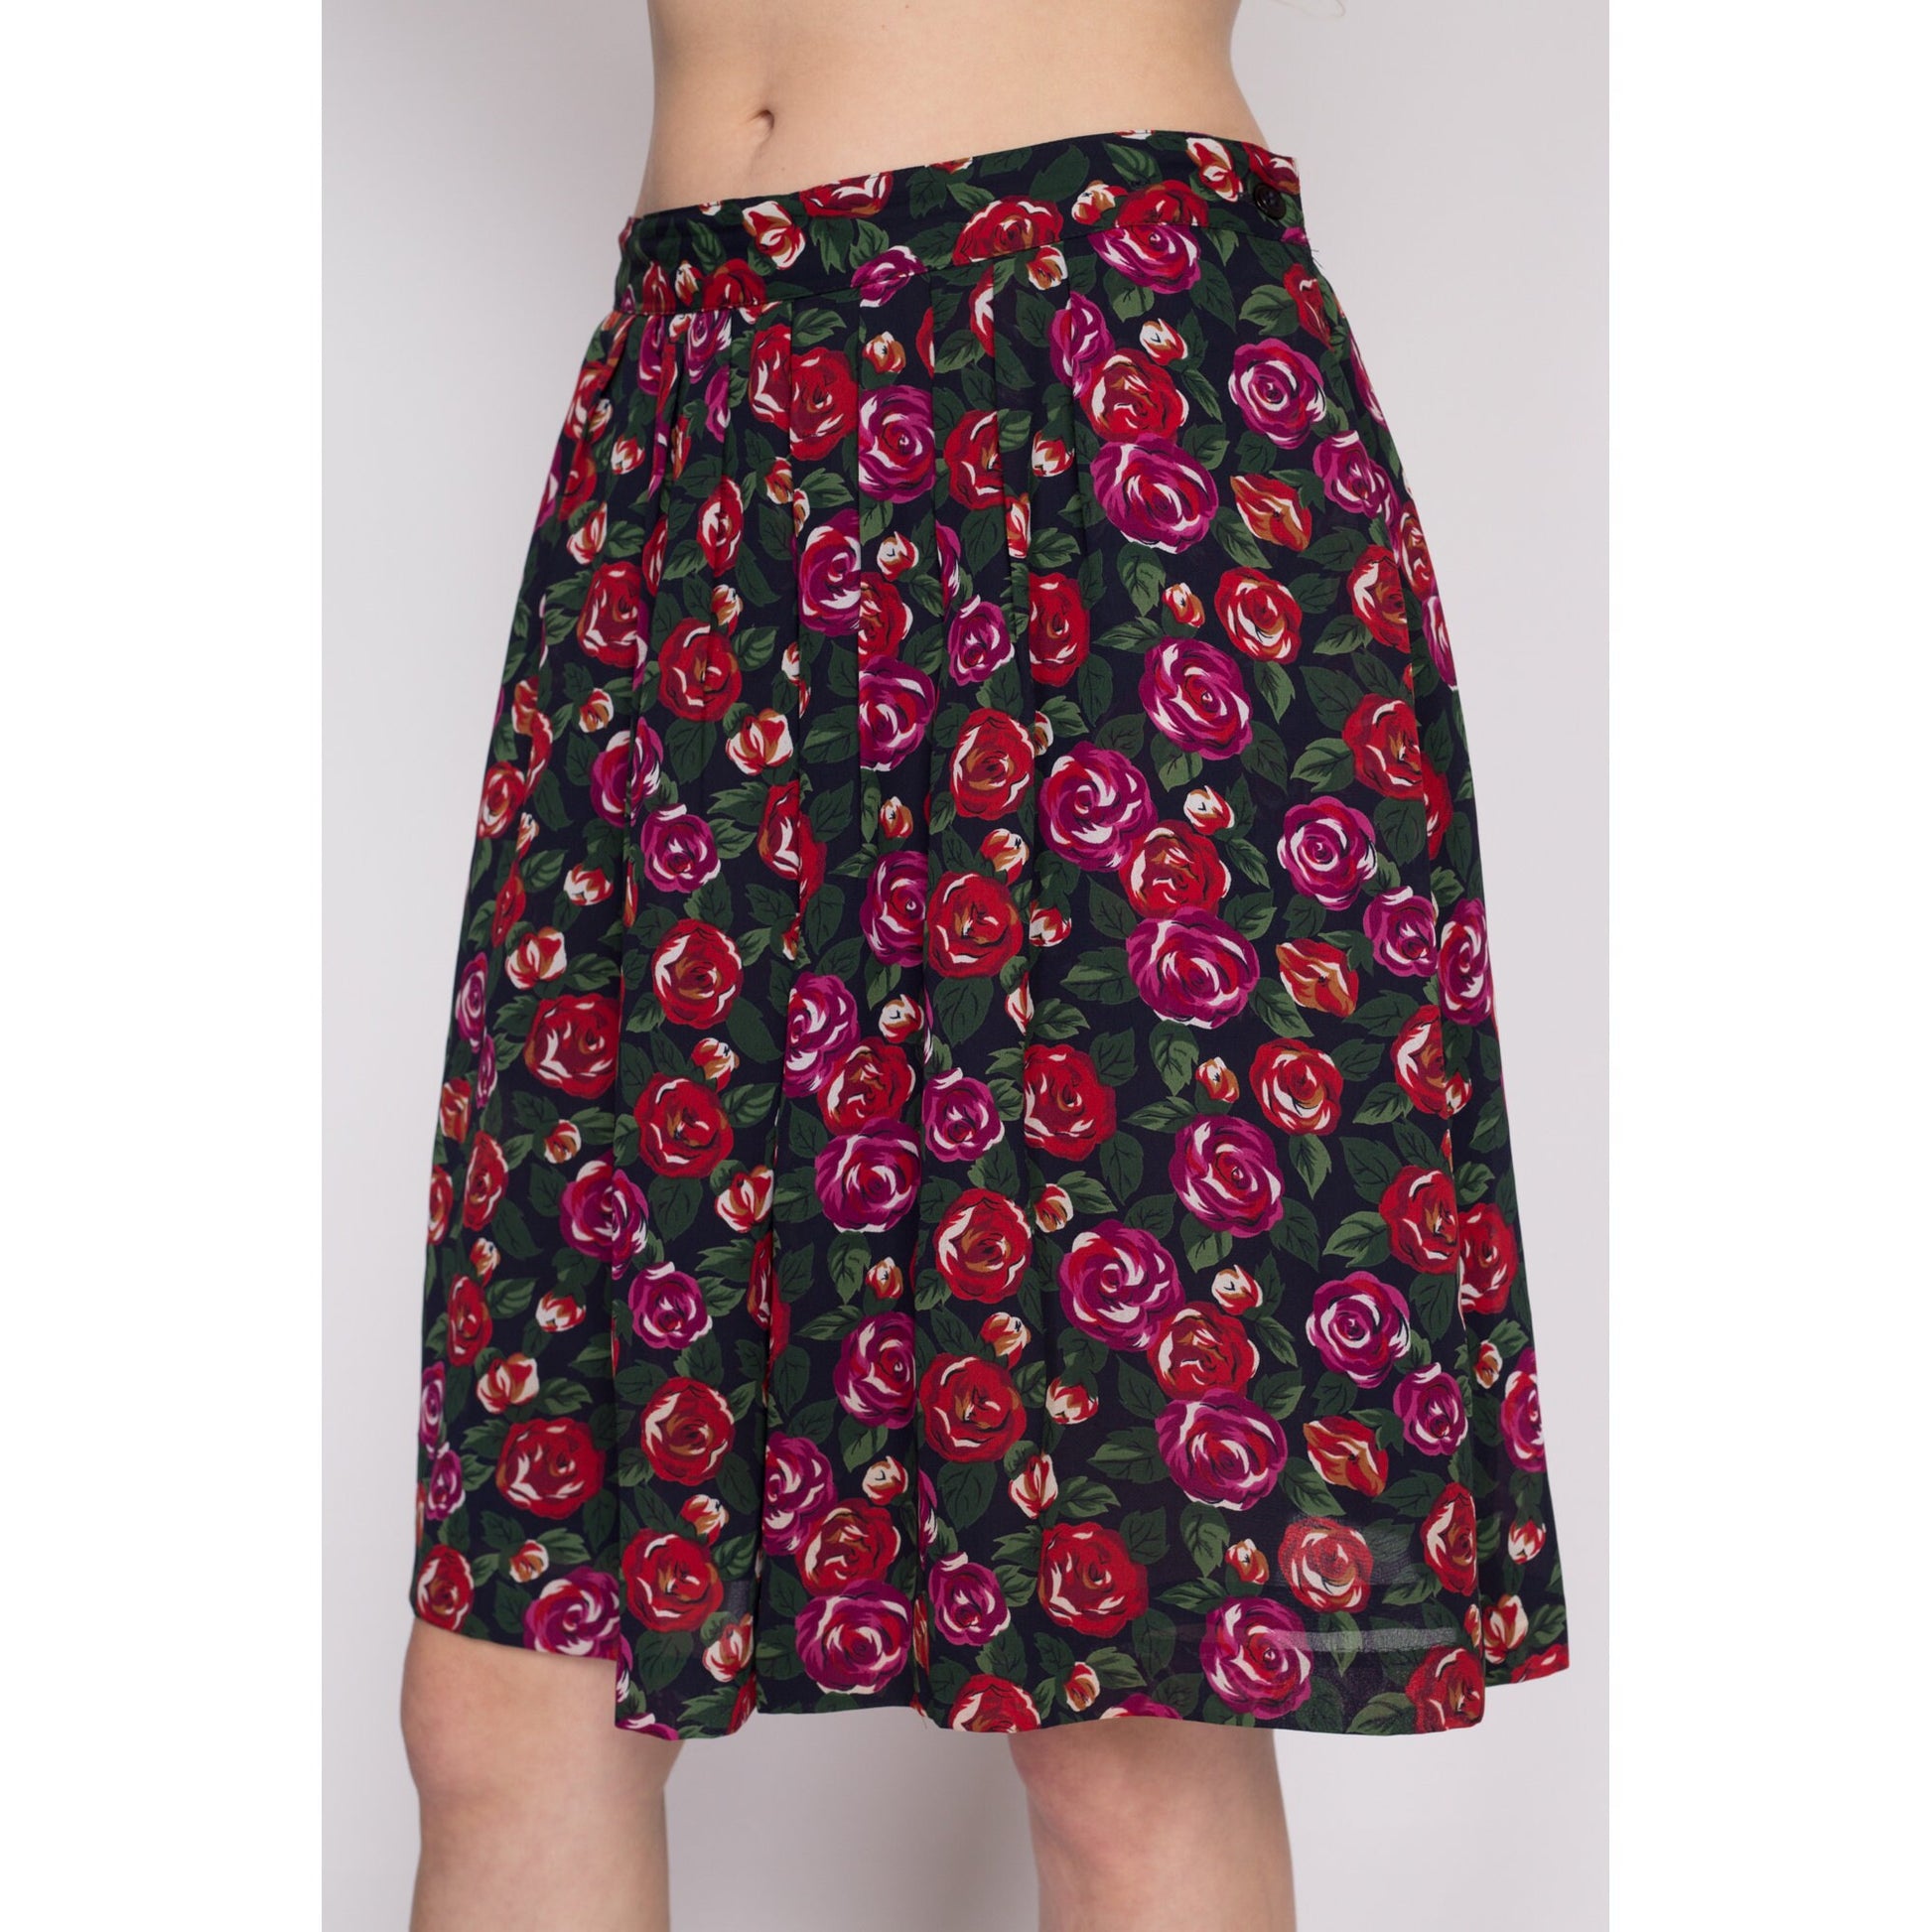 L| 90s Flowy Floral Lounge Shorts - Large | Vintage Boho High Waisted Wide Leg Shorts